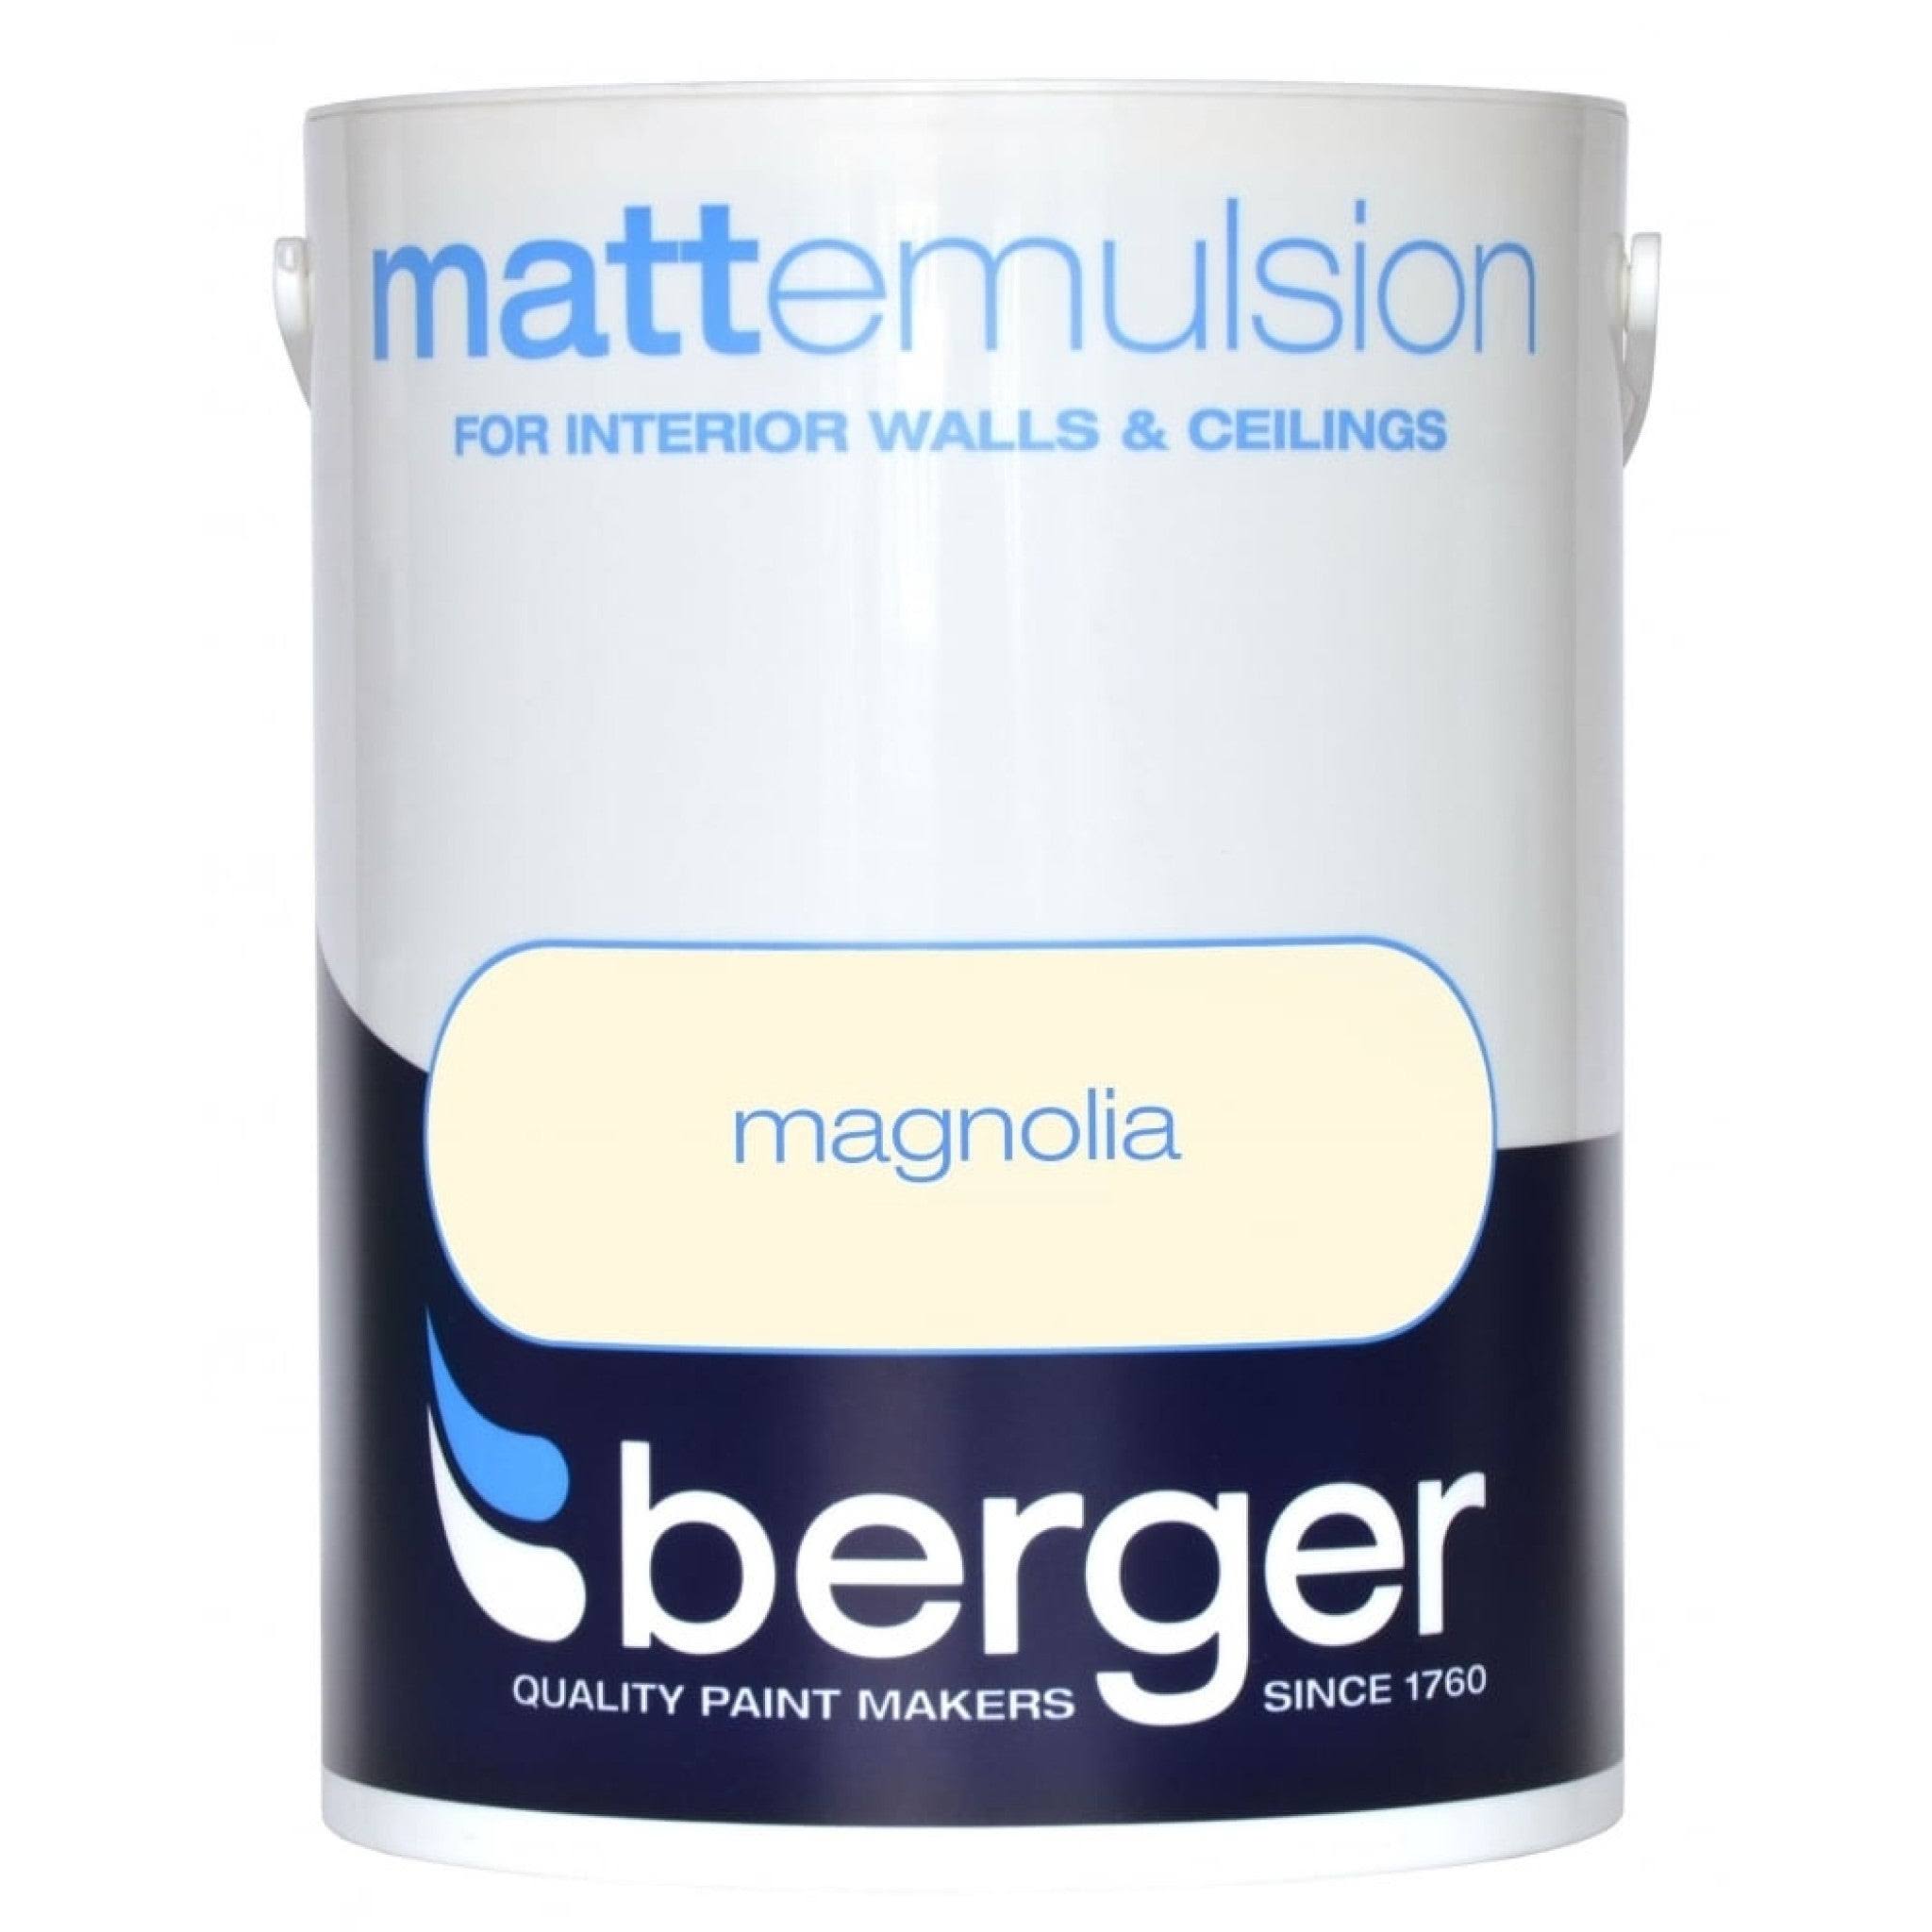 Berger Matt Emulsion Paint - Magnolia